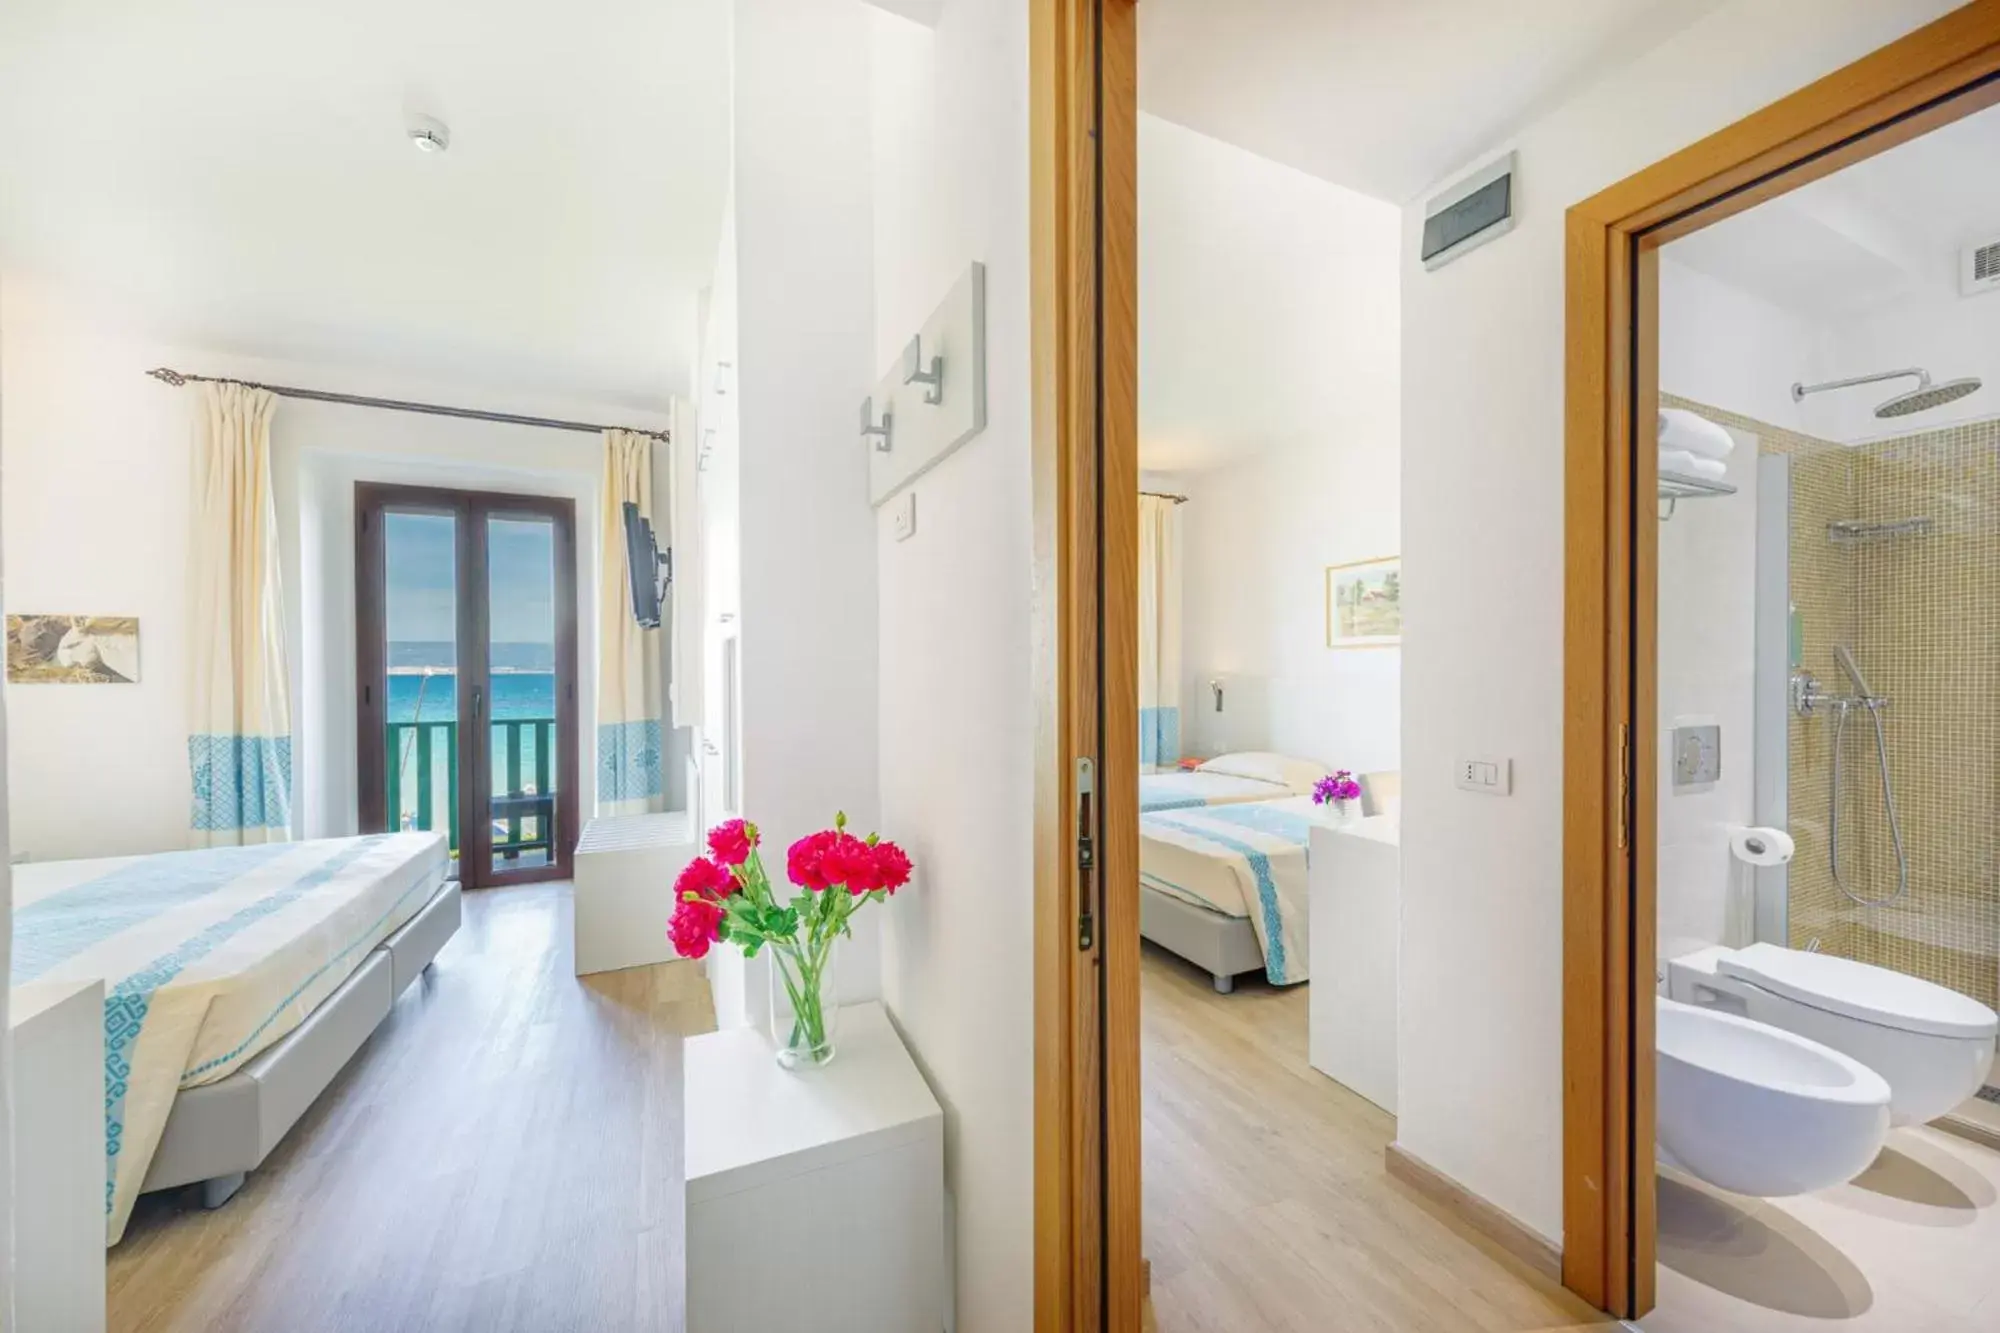 Photo of the whole room, Bathroom in Hotel Dei Pini